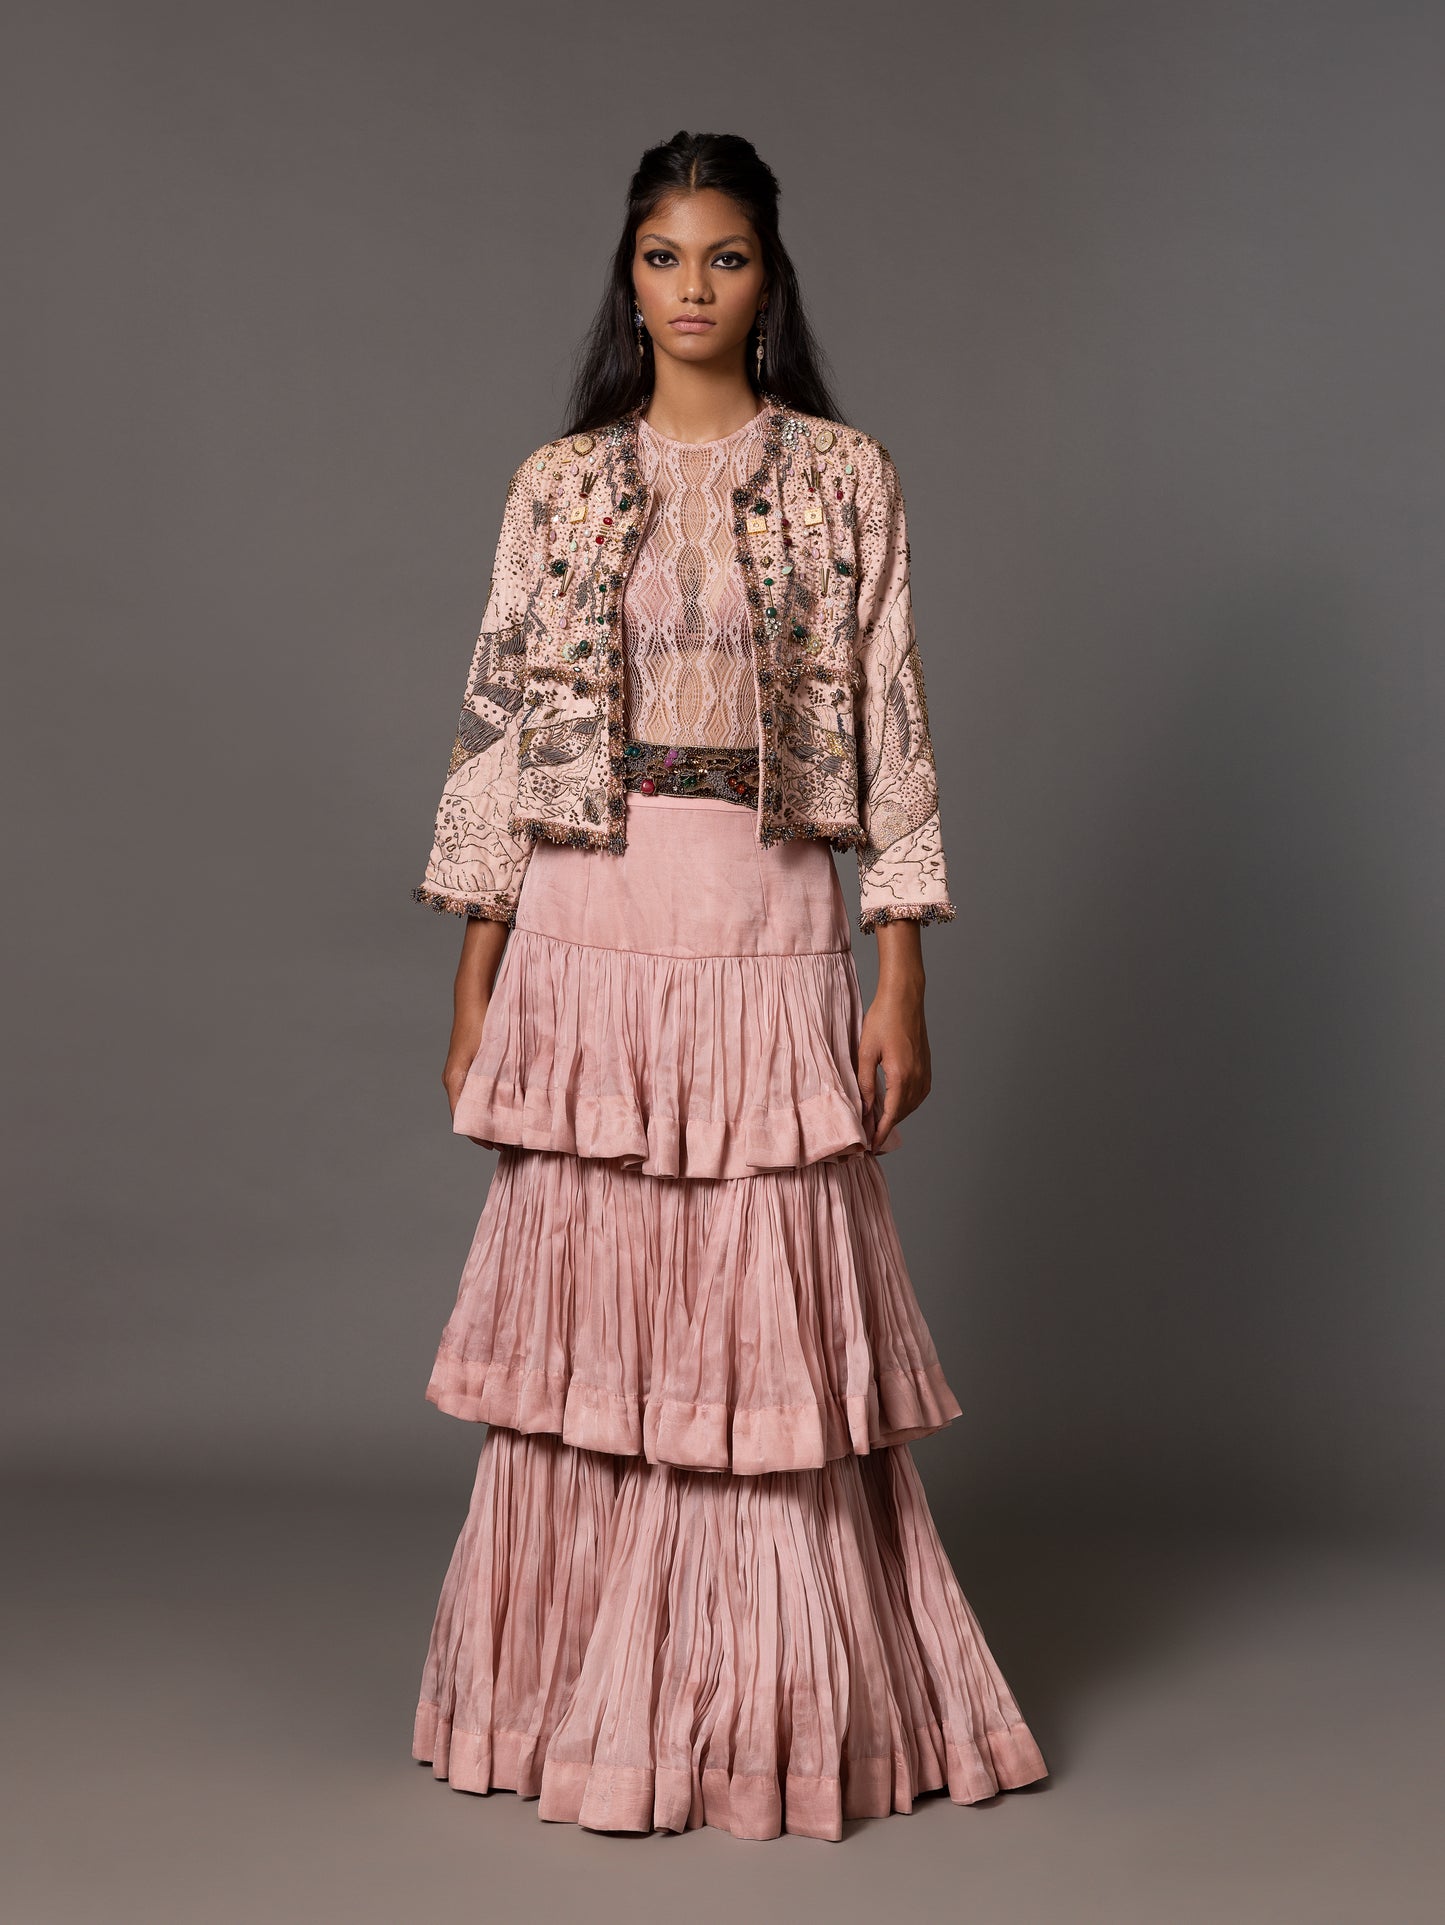 Sang-E-Sitara Pink Jacket, Lace Leotard And Chand Baori Skirt Set